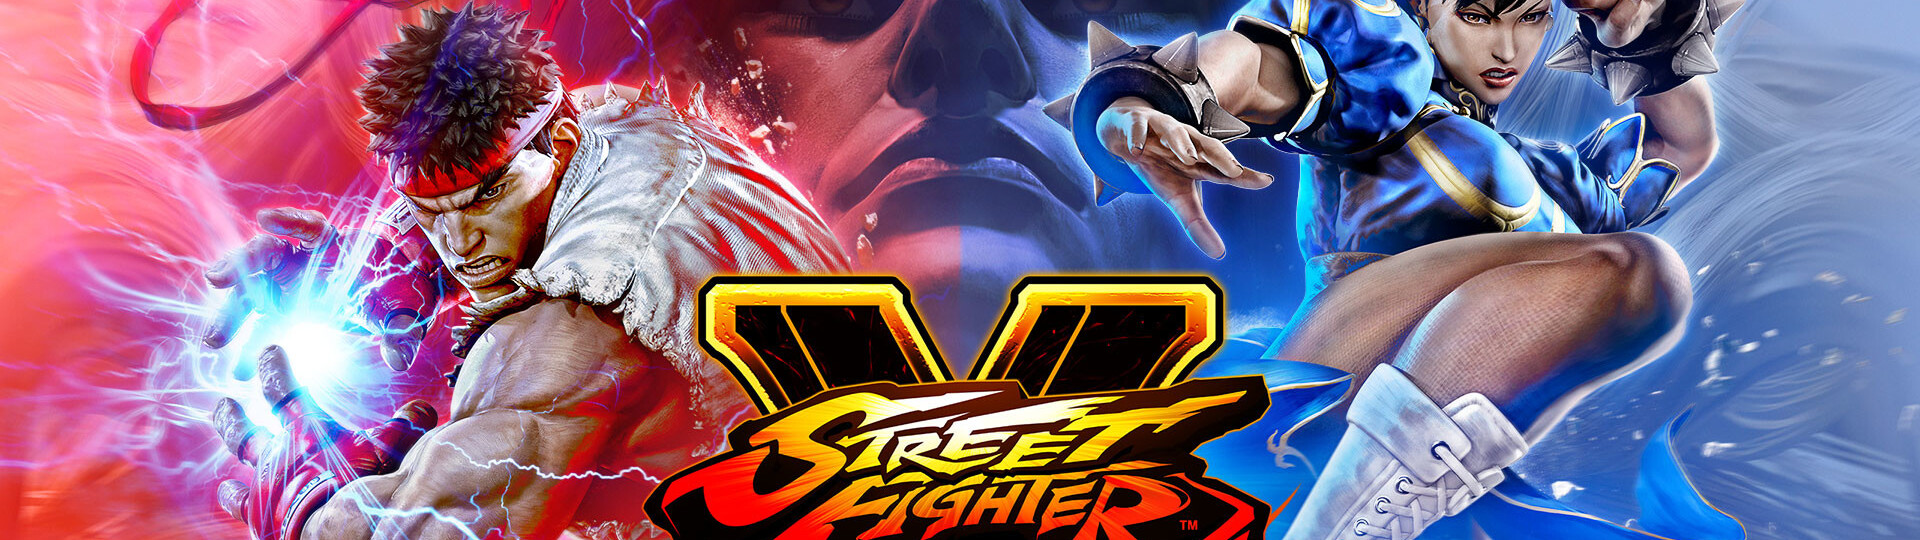 Trailer na novou postavu do Street Fighter V | Videa